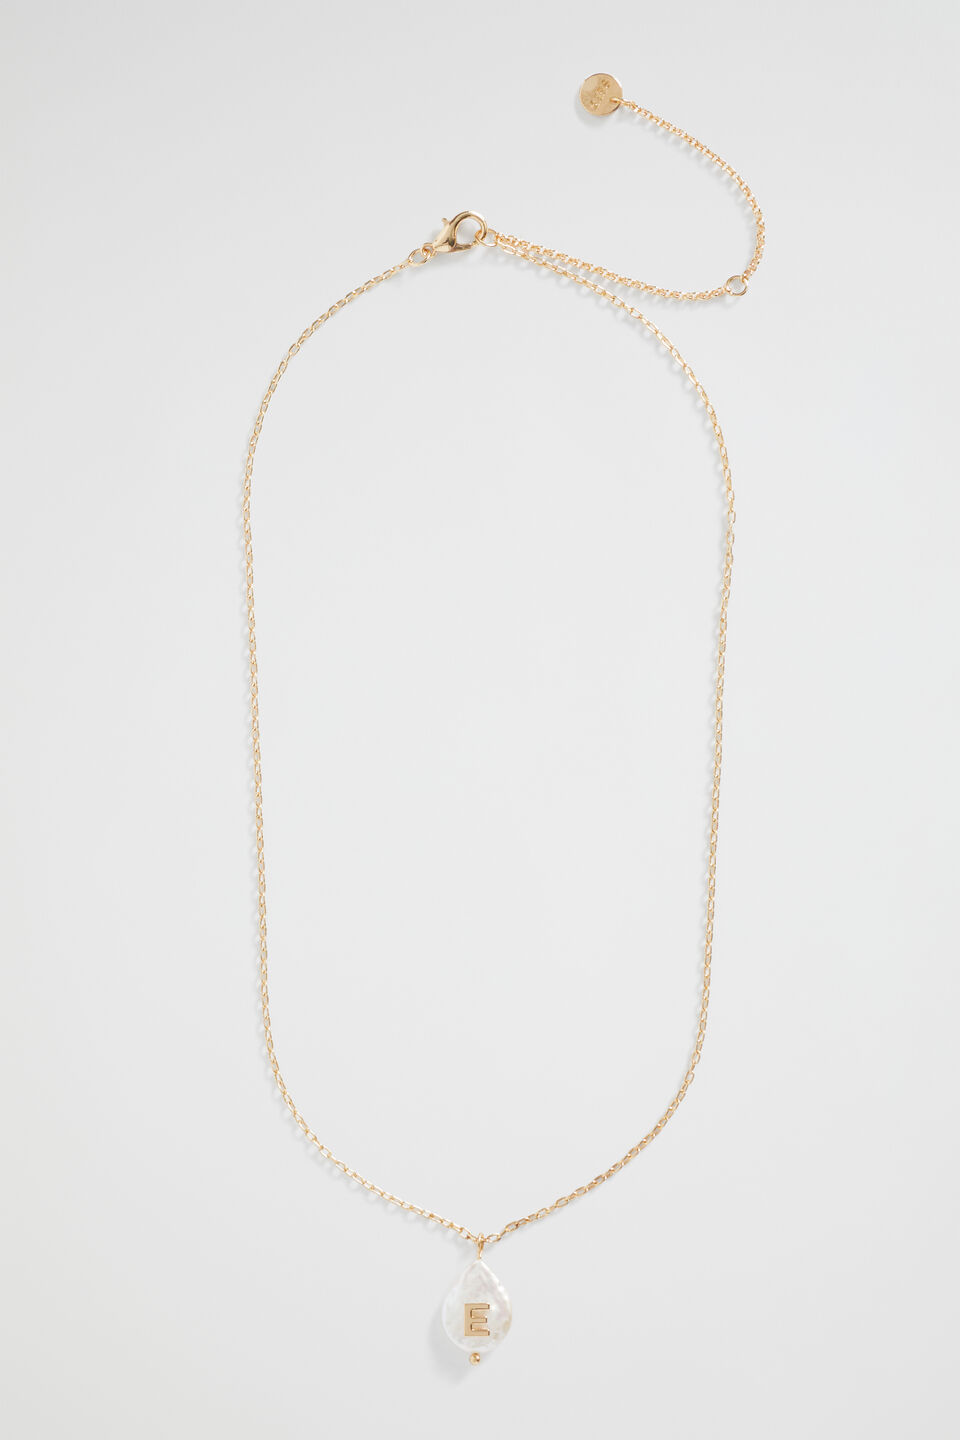 Pearl Alphabet Necklace  E